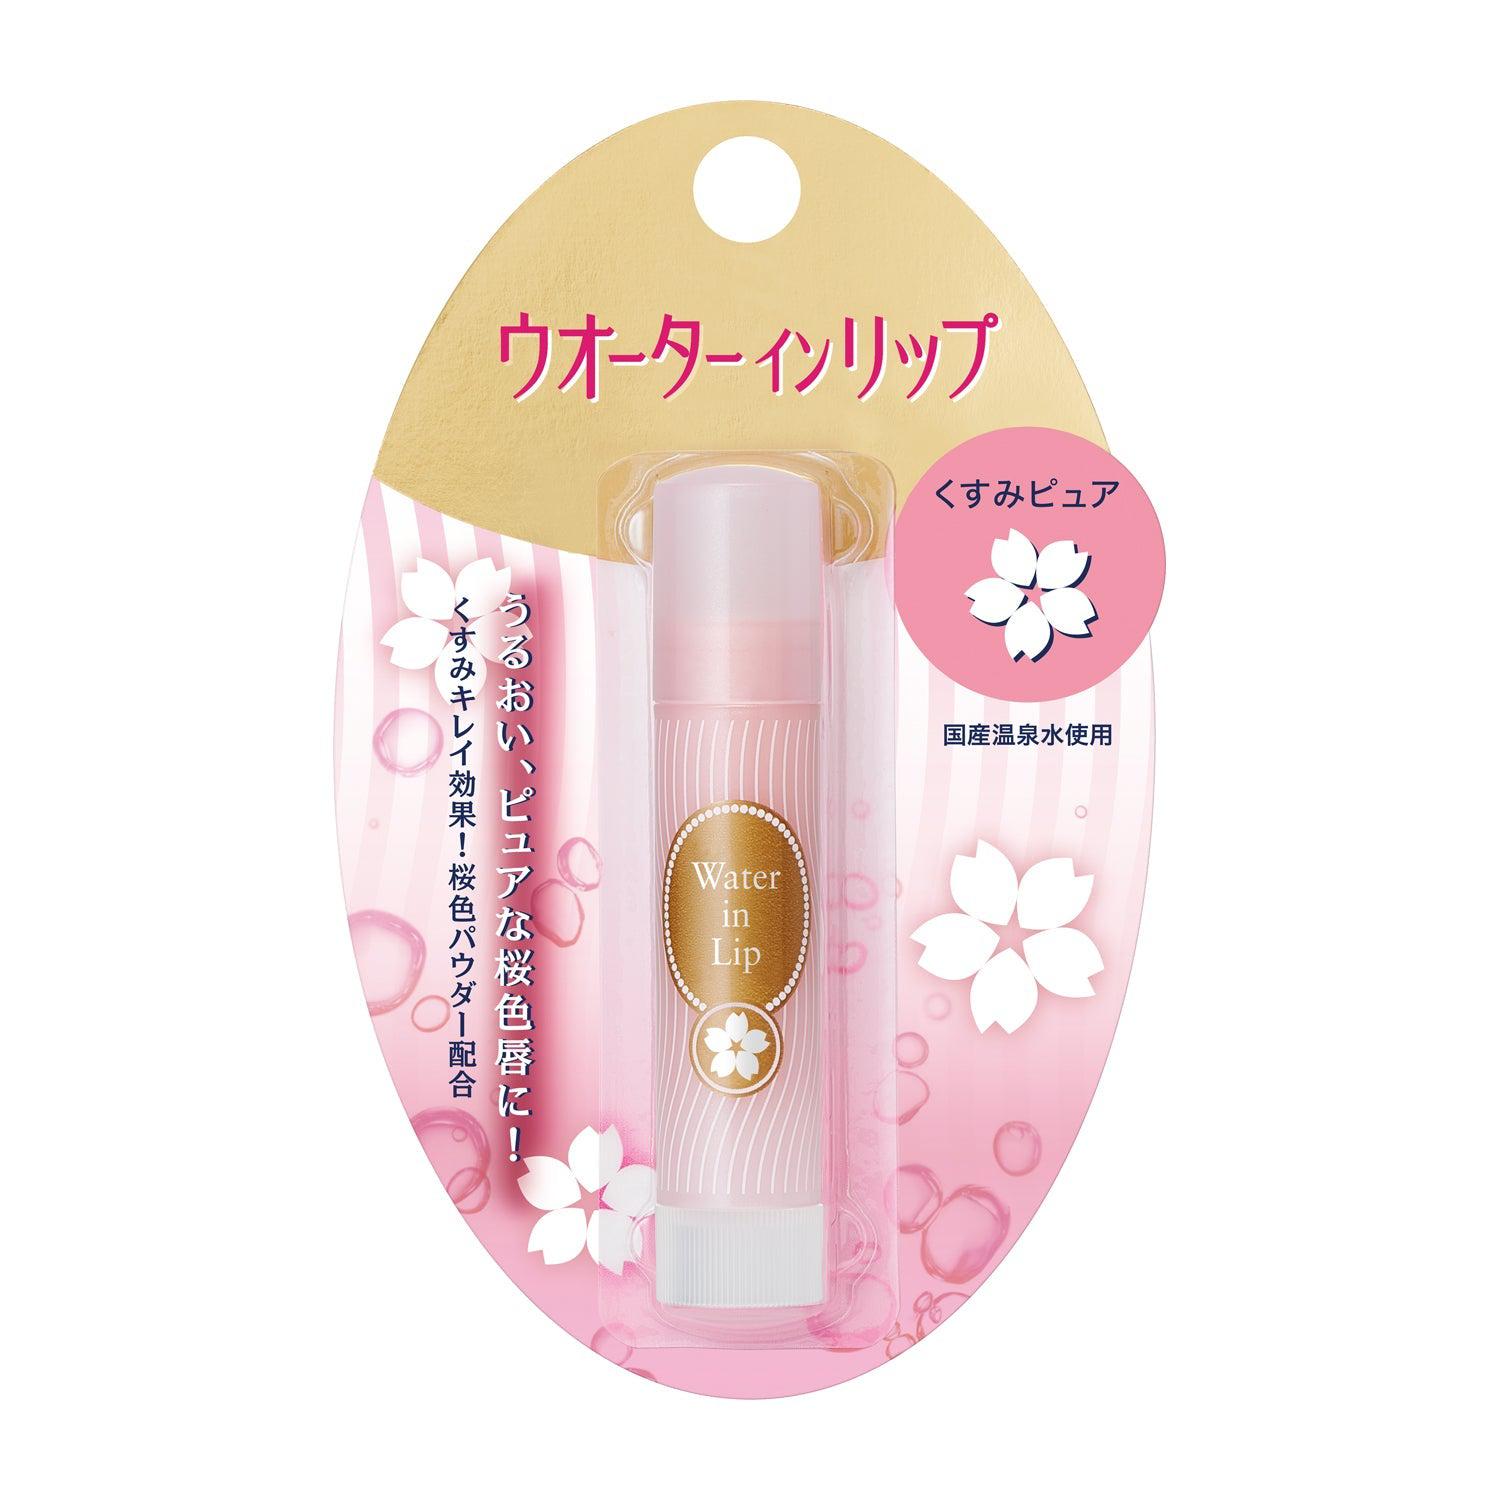 Shiseido Water In Lip Sakura Lip Balm 3.5g, Japanese Taste